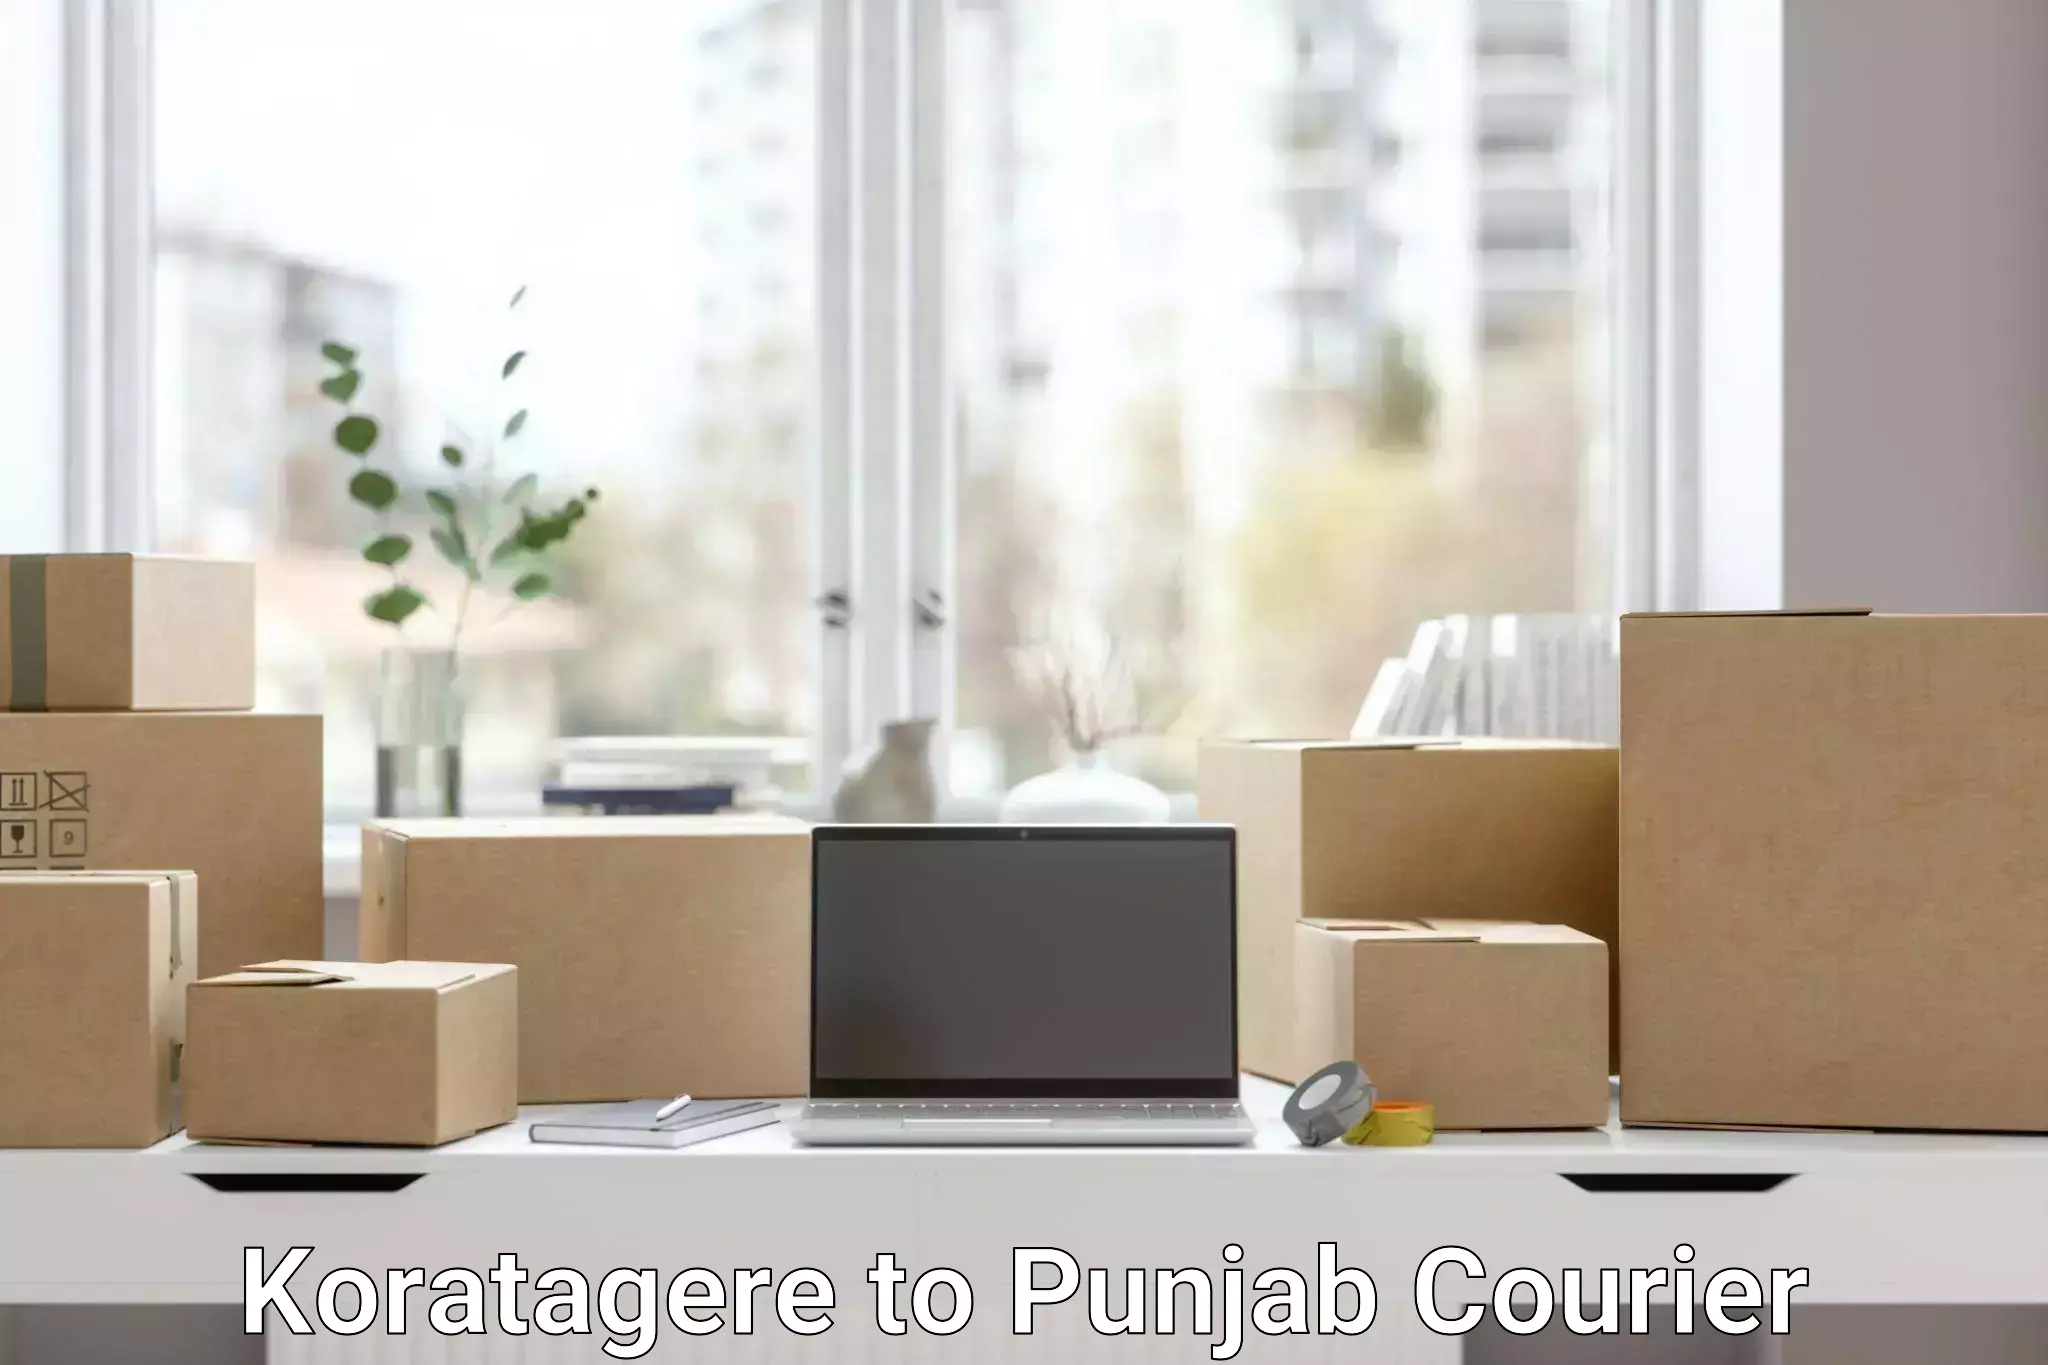 E-commerce fulfillment Koratagere to Punjab